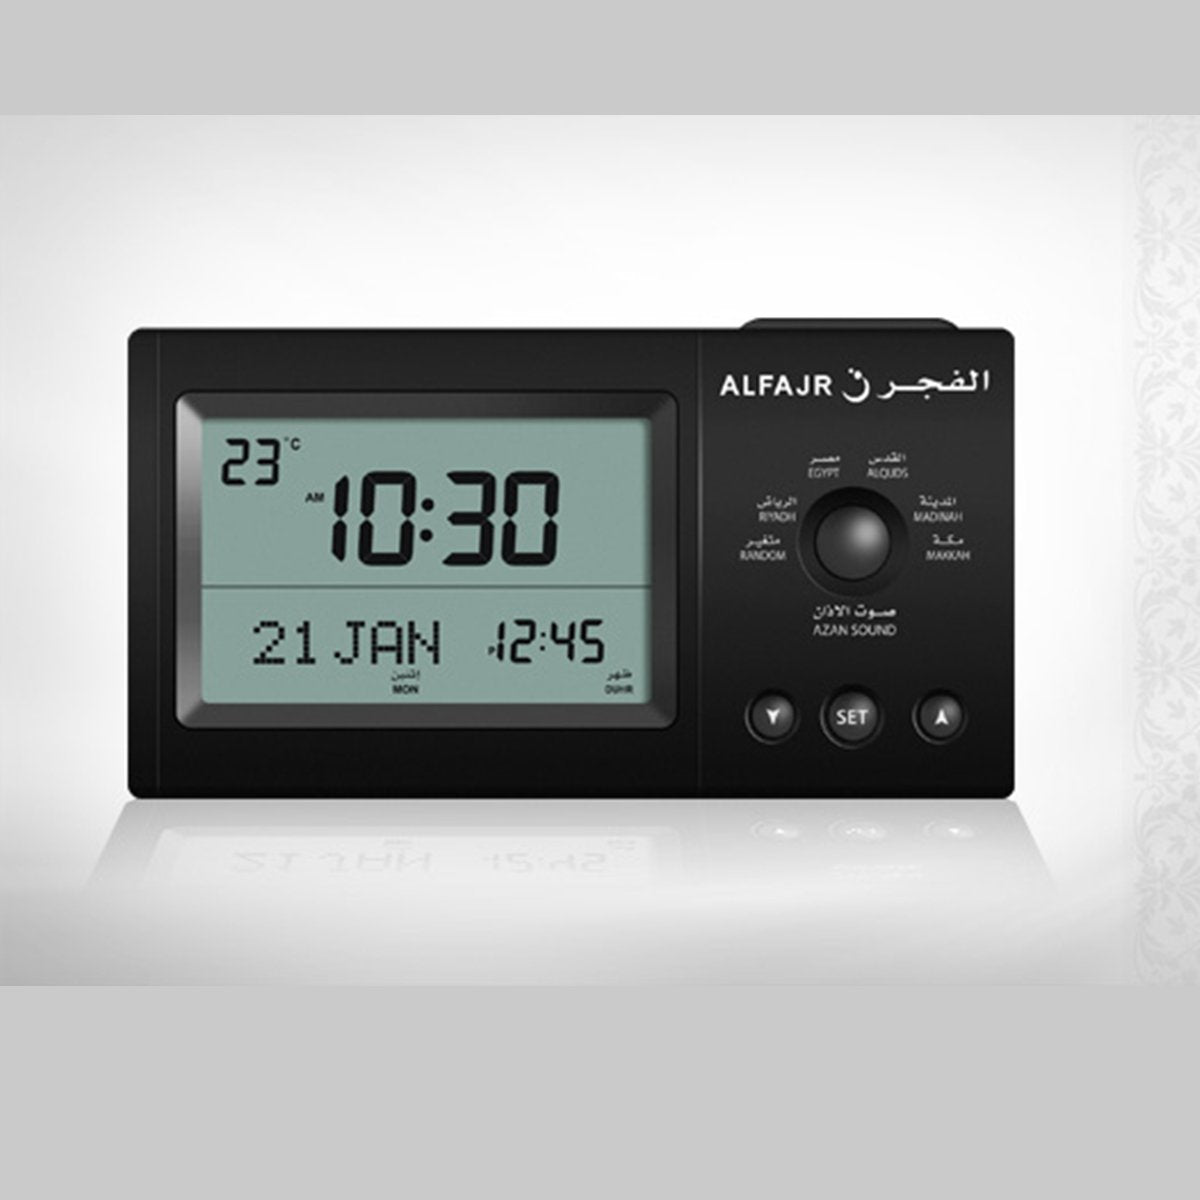 Alfajr Azan Table Clock CT-01 - Smile Europe Wholesale 